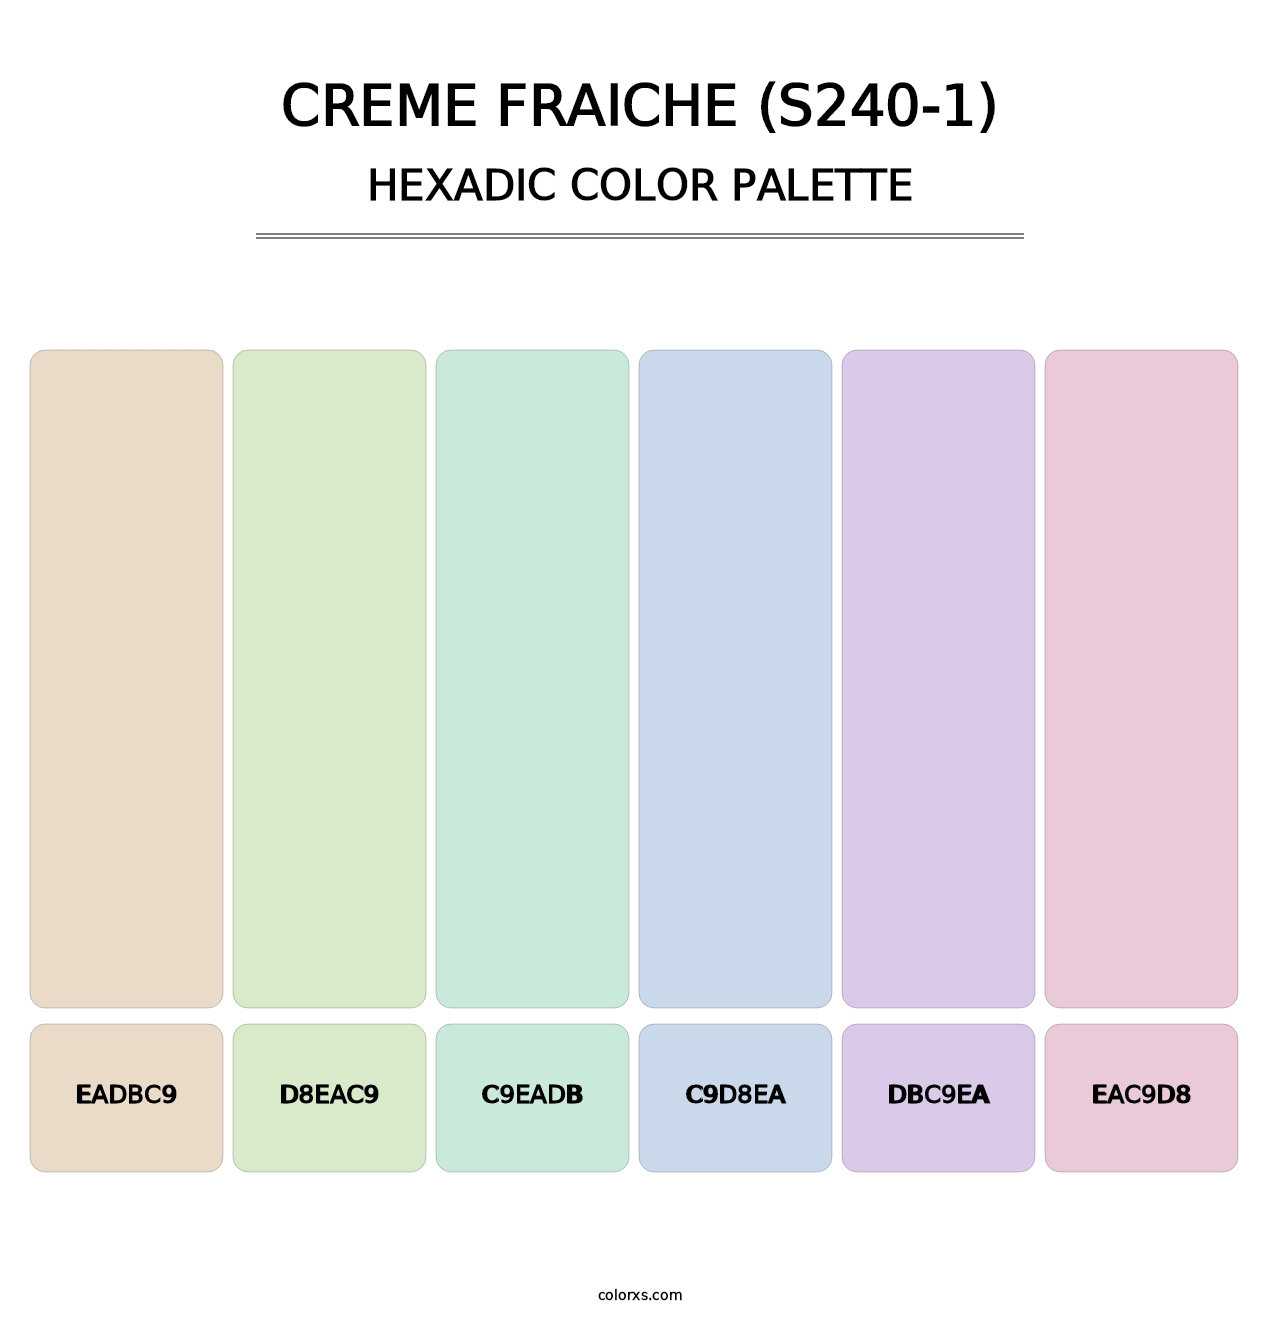 Creme Fraiche (S240-1) - Hexadic Color Palette